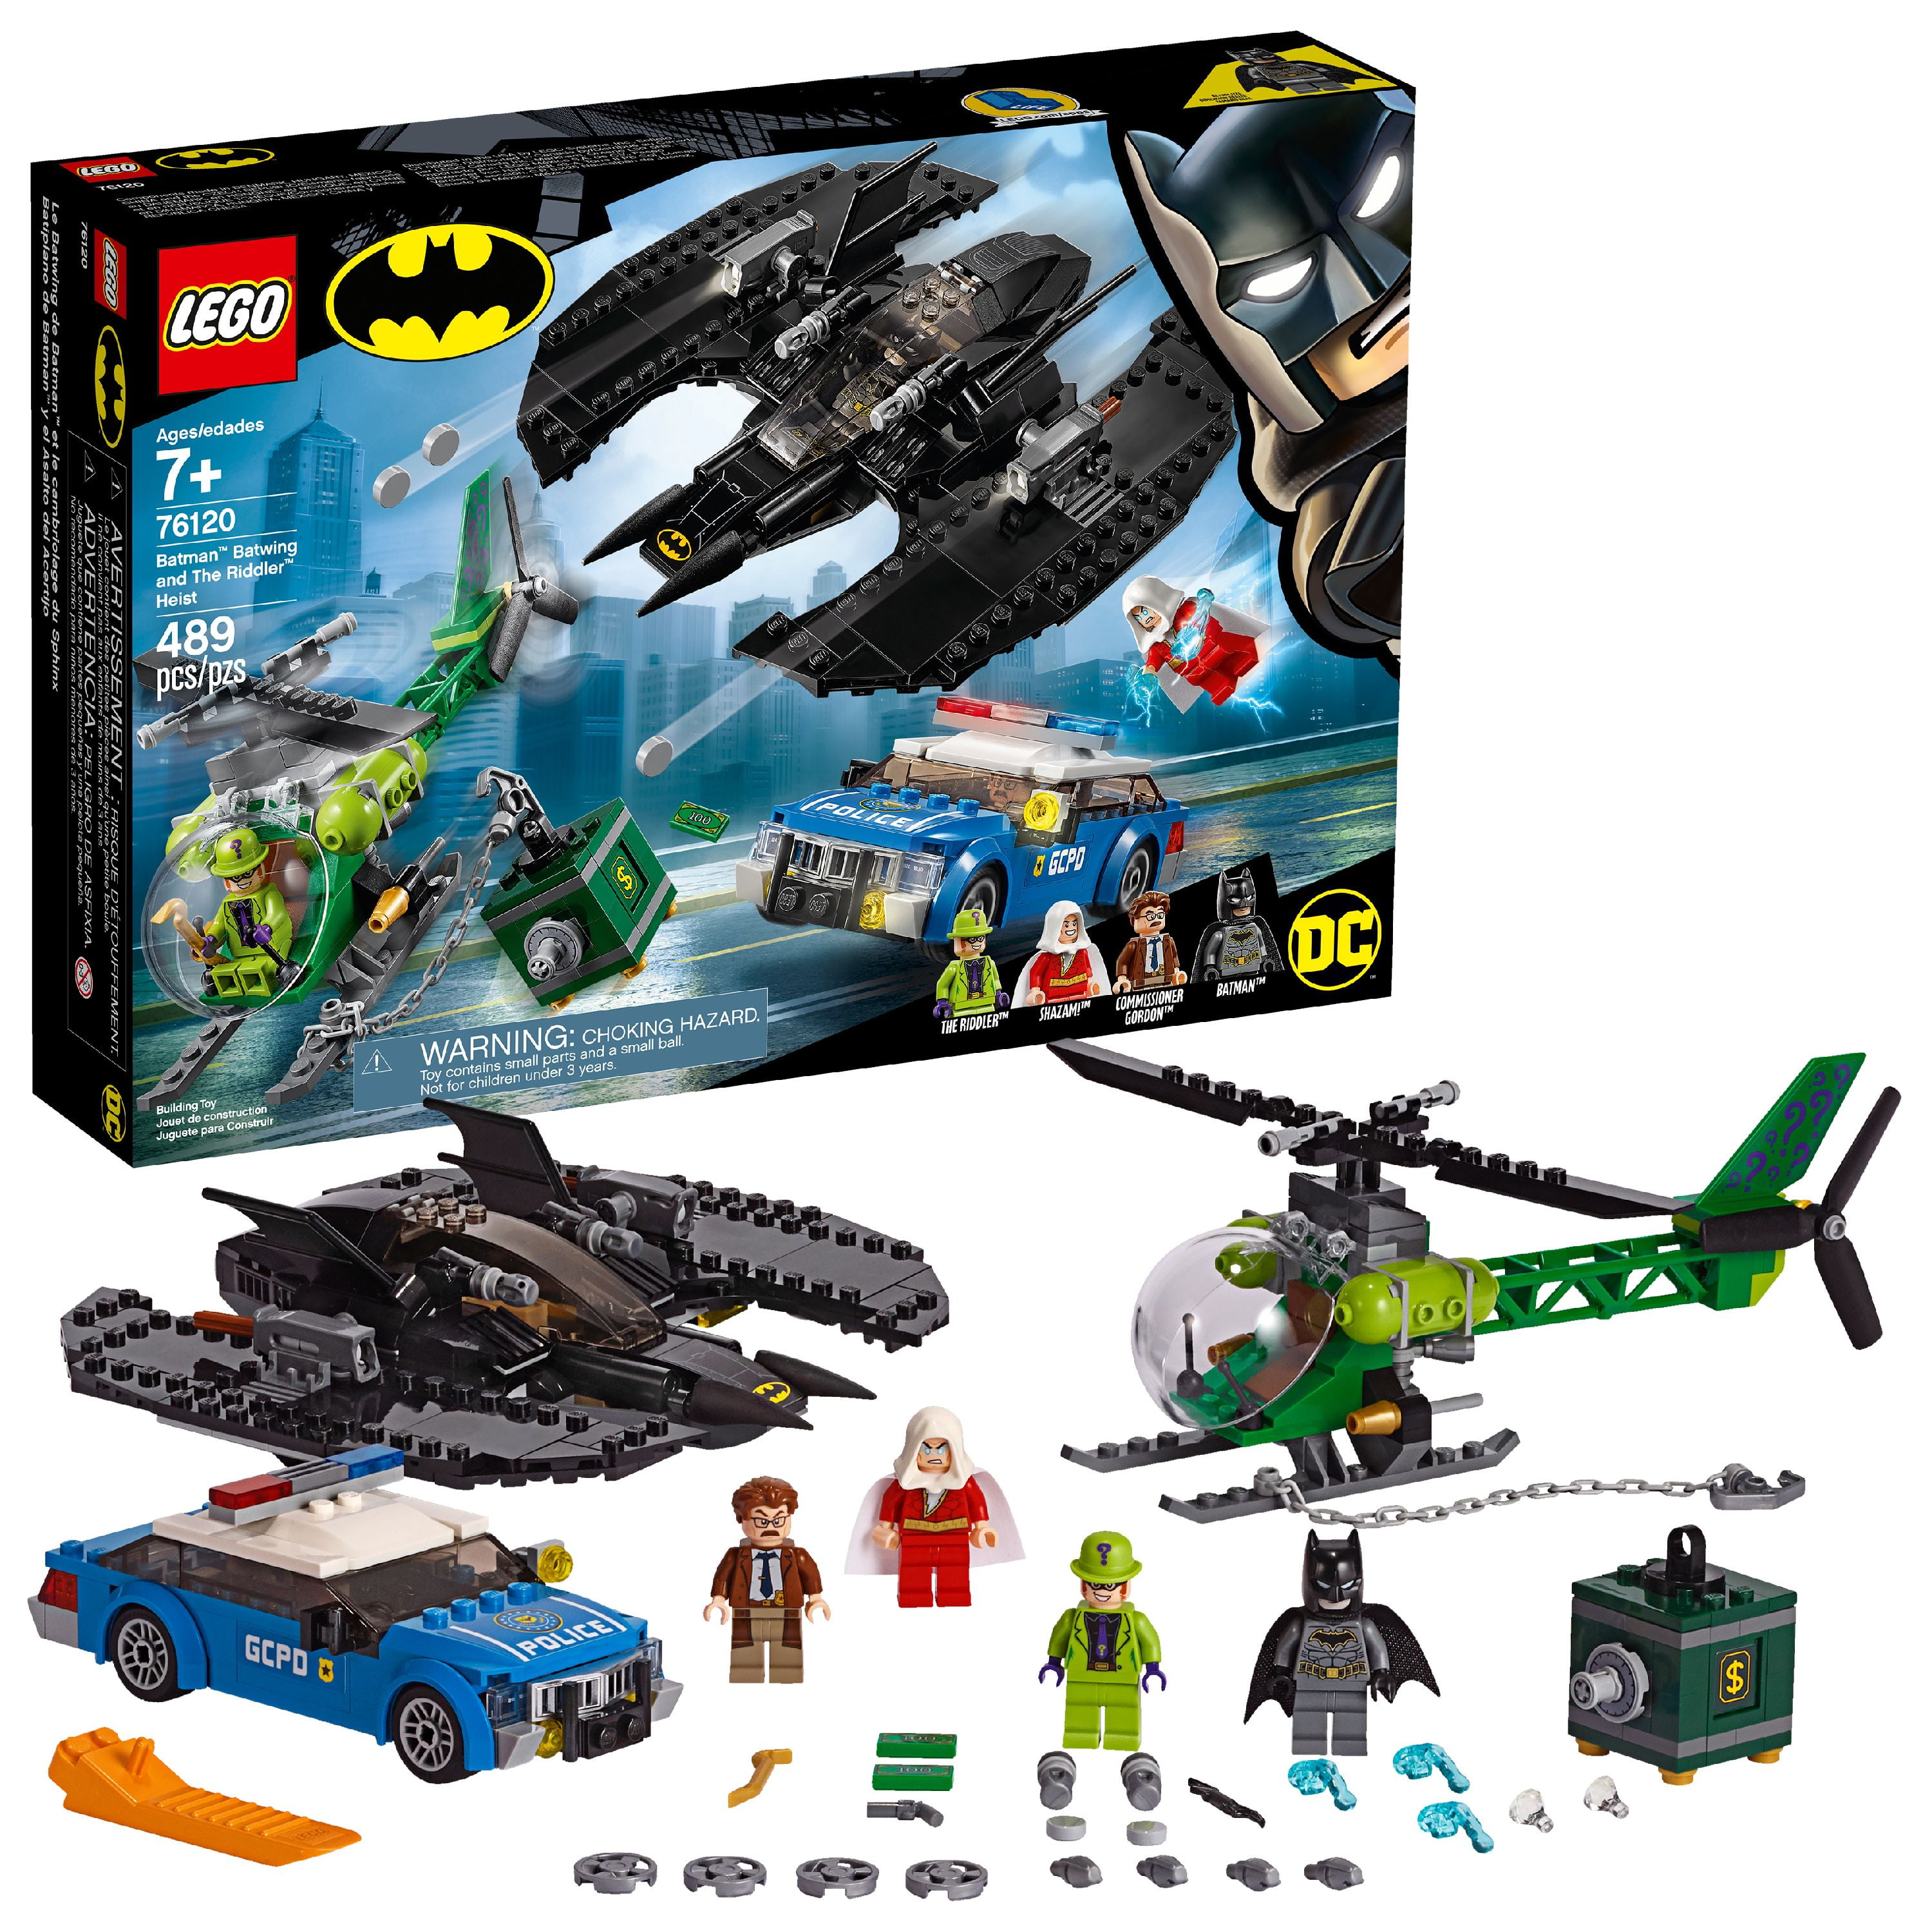 FREE GIFT LEGO SUPER HEROES NEW SUPER FAST BATMAN MR FREEZE MICROFIG 